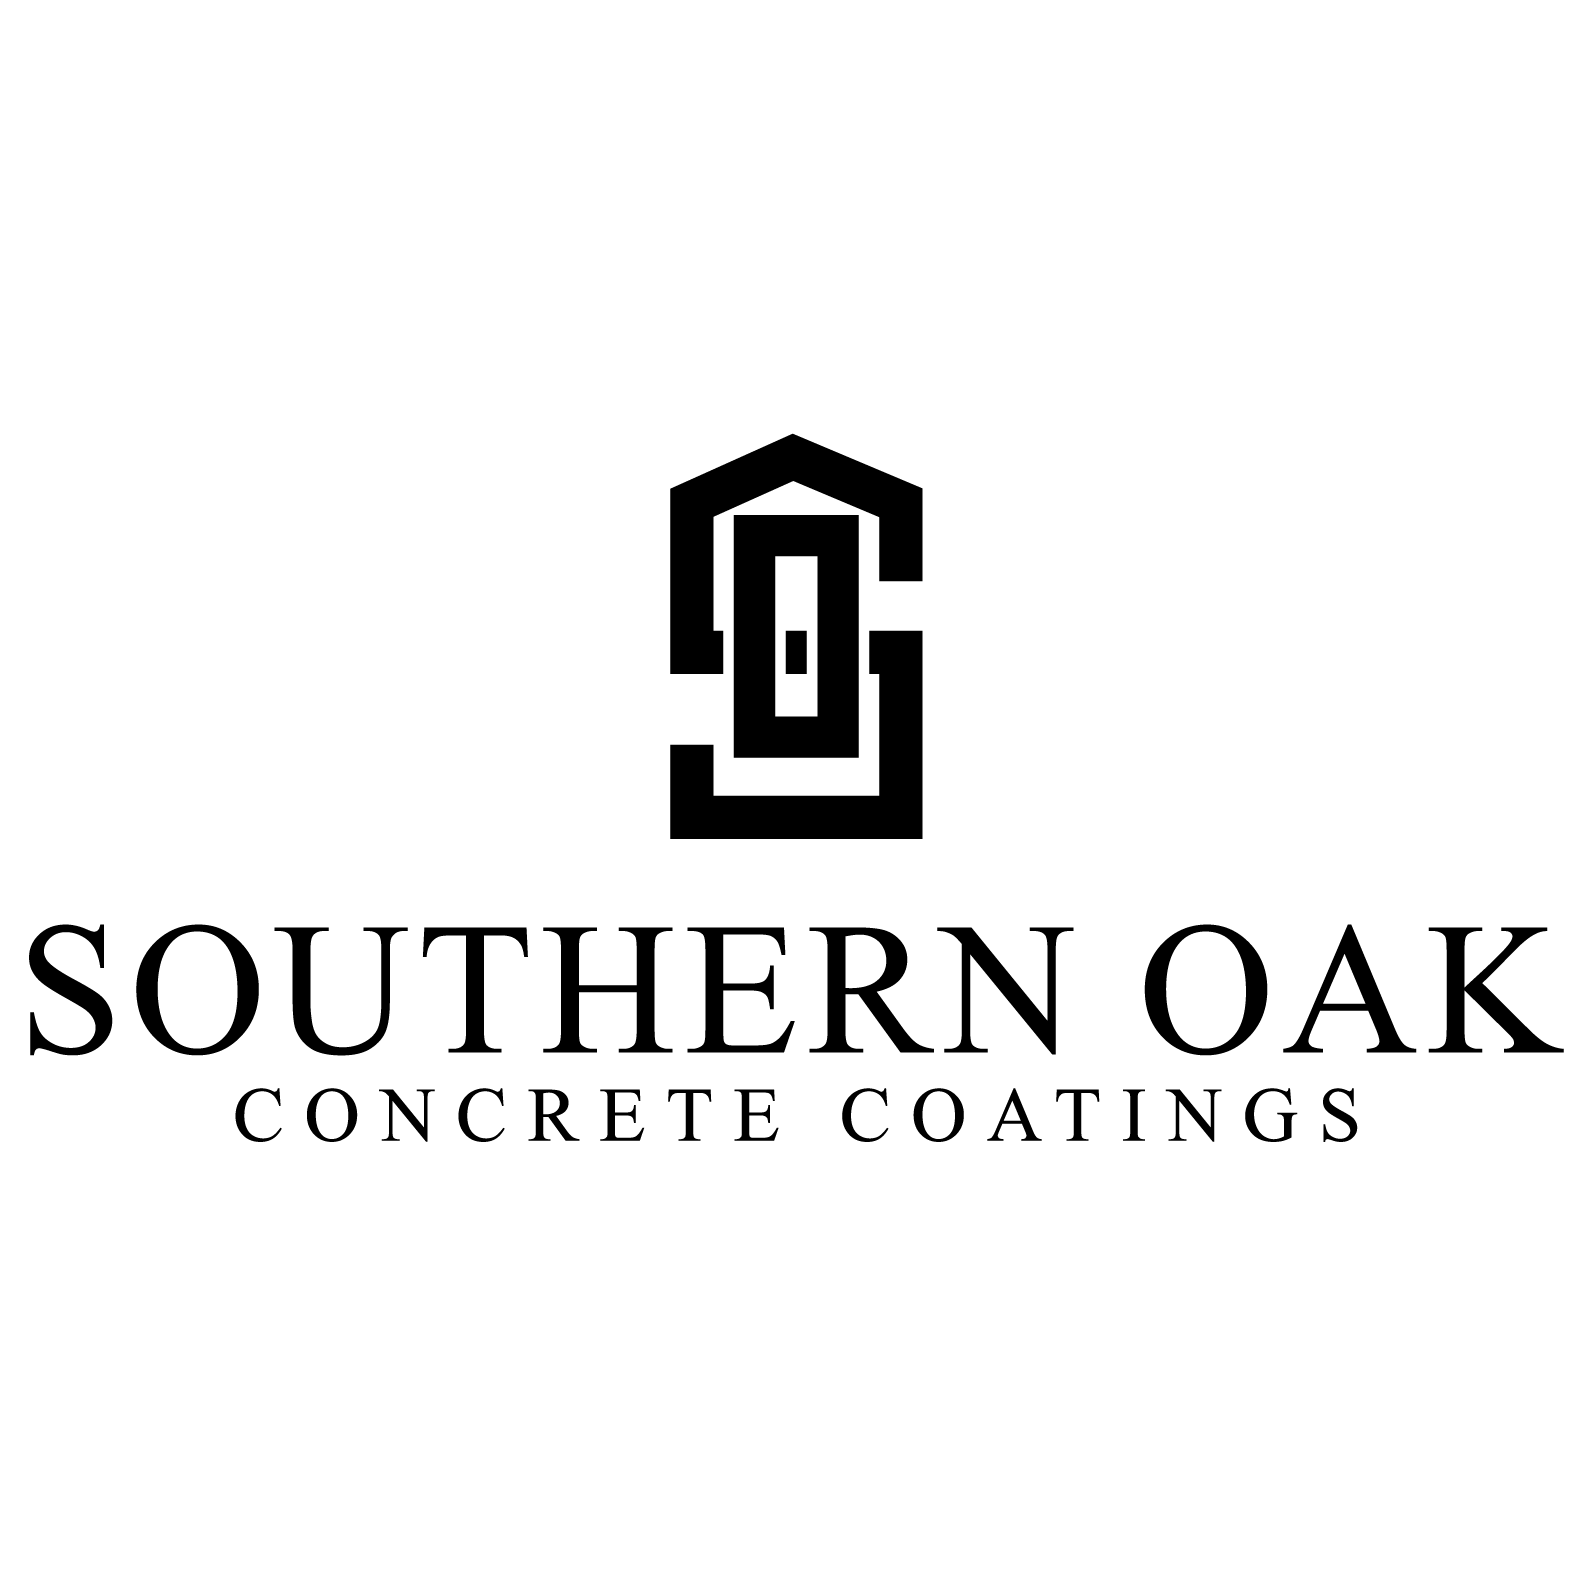 Southern Oak Concrete Coatings